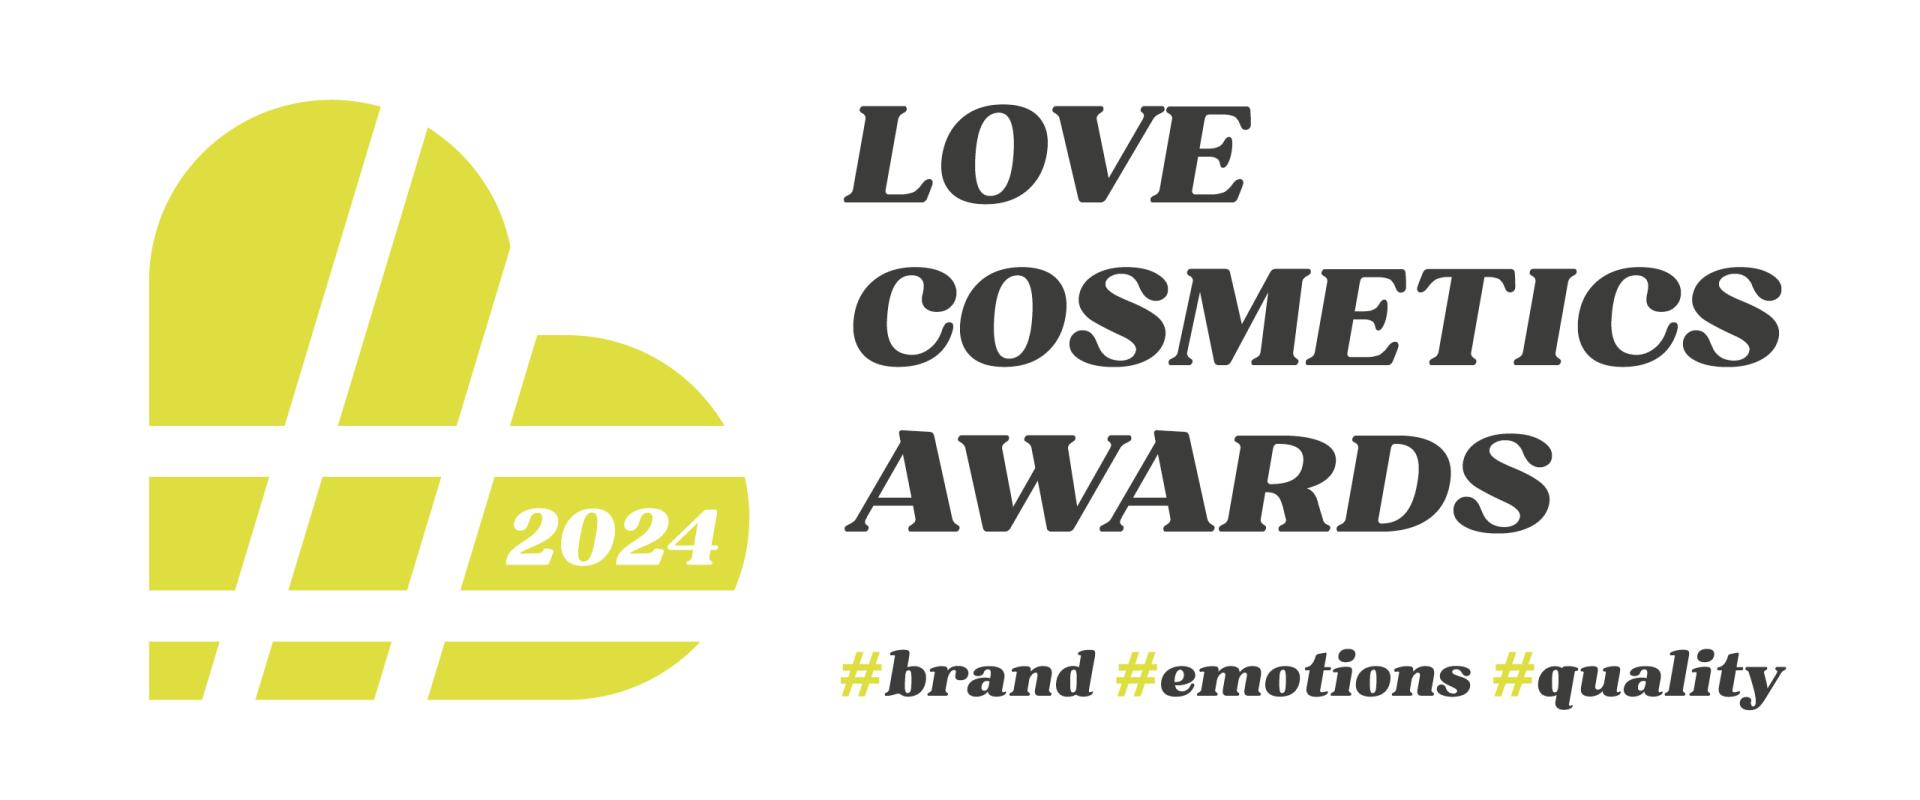 LOVE COSMETICS AWARDS 2024 – laureaci i wyróżnieni